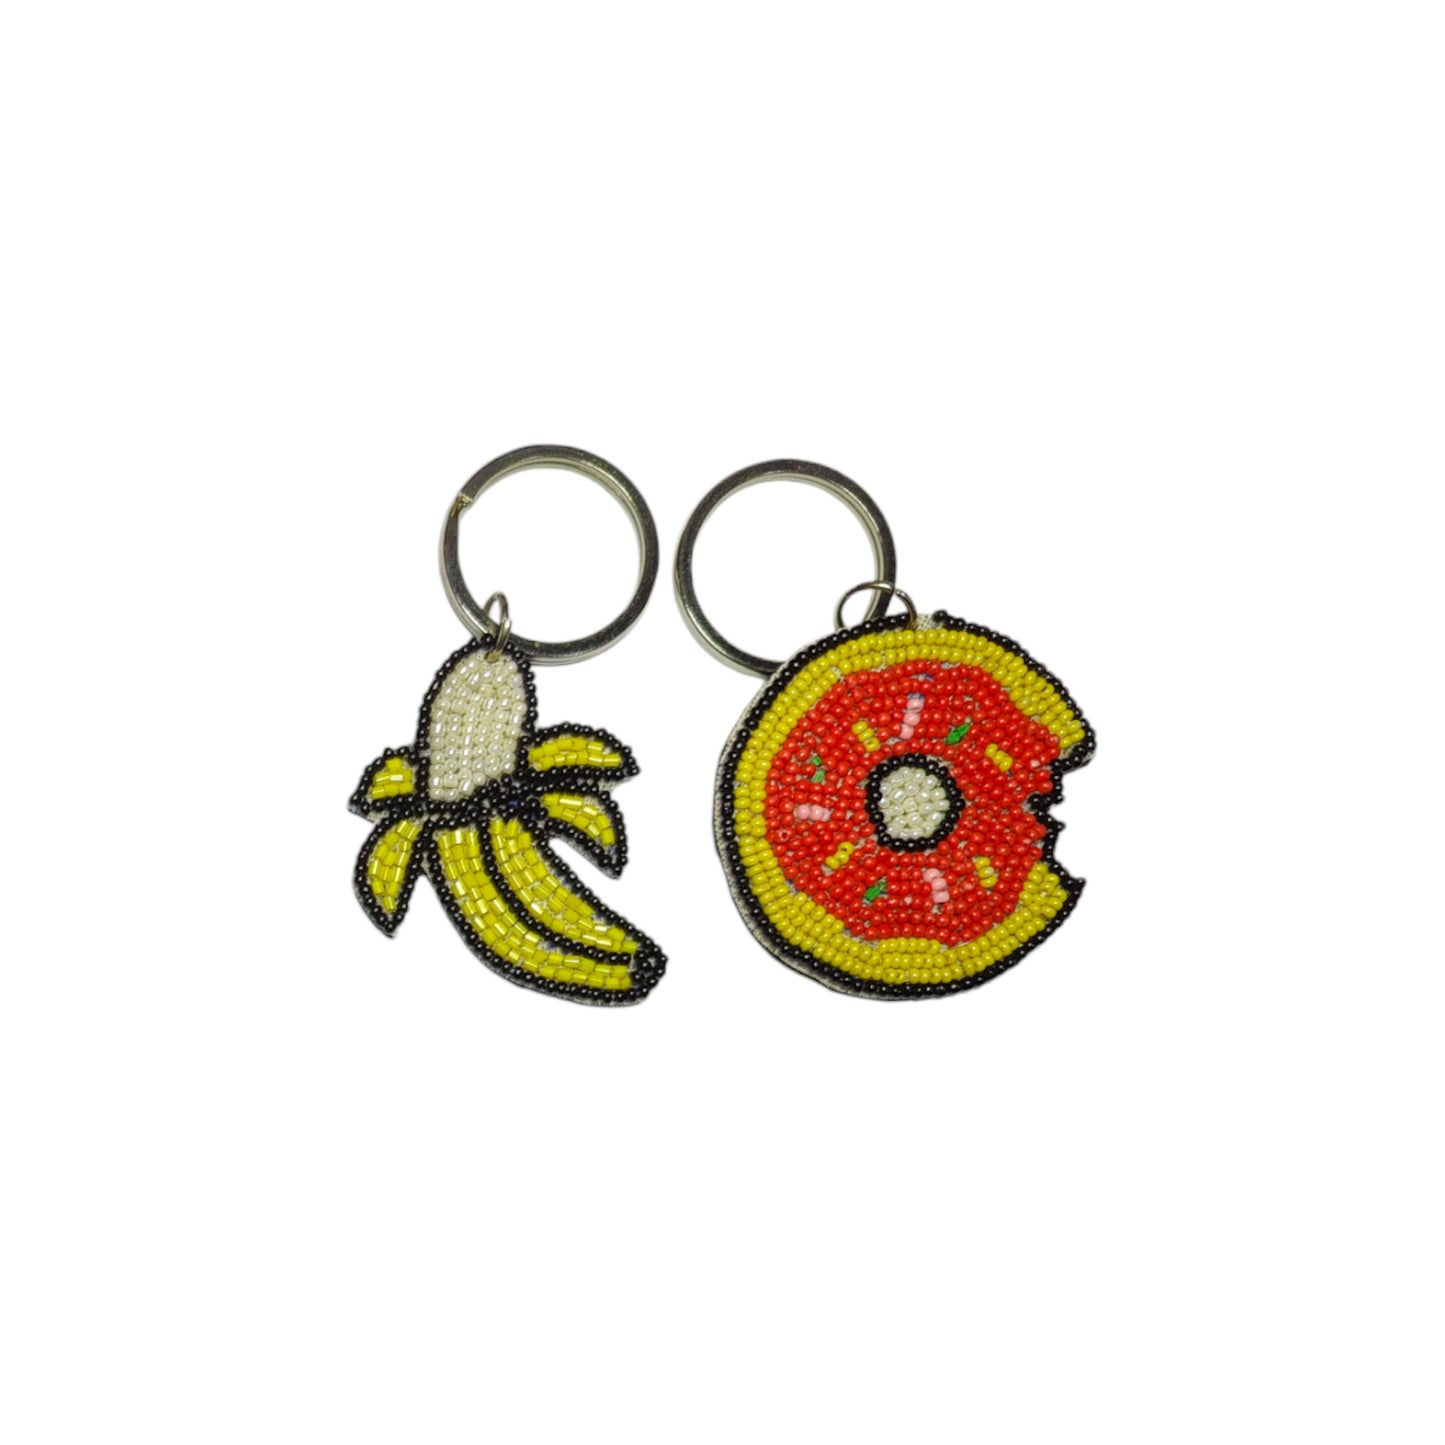 Two Vdesi banana and donut keychains, perfect as bag charms.